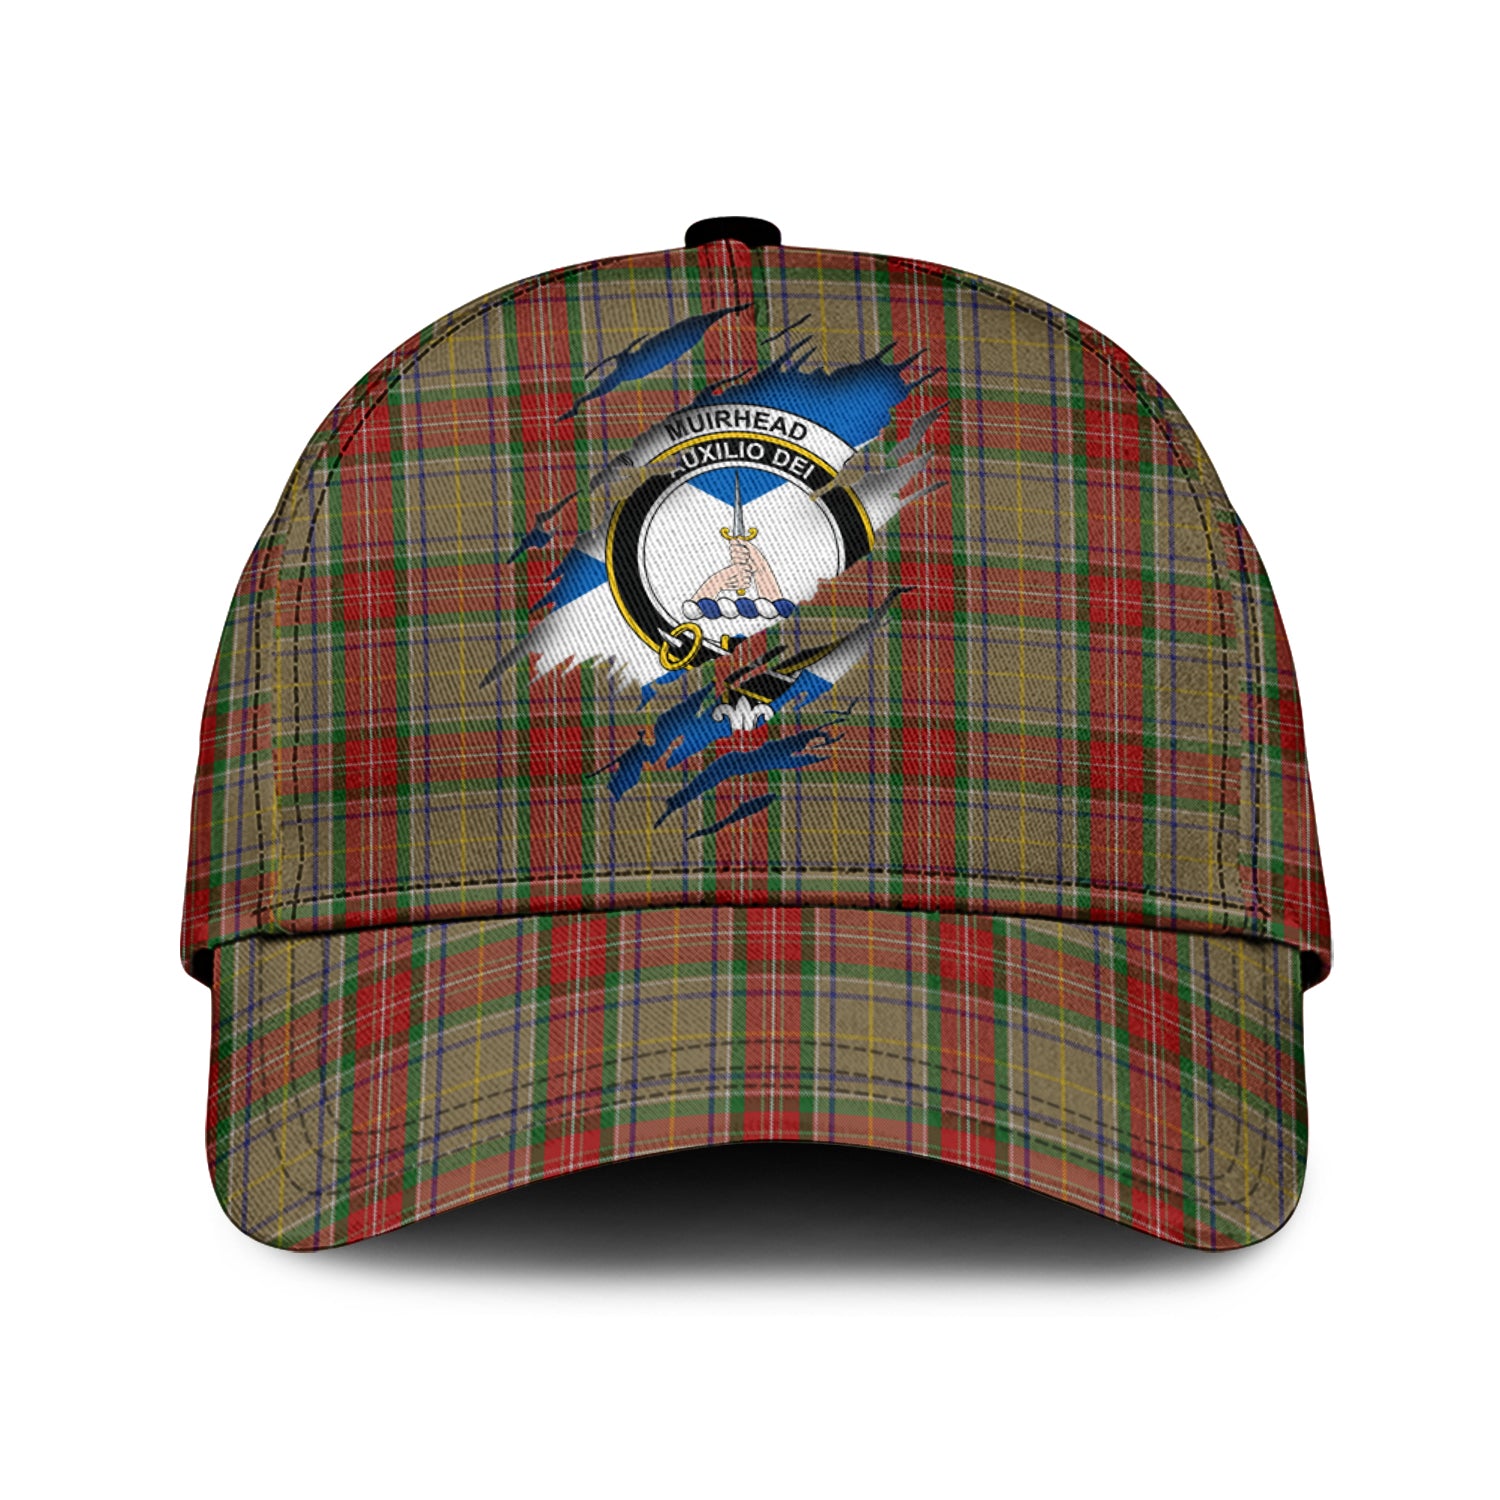 muirhead-old-tartan-plaid-cap-family-crest-in-me-style-tartan-baseball-cap